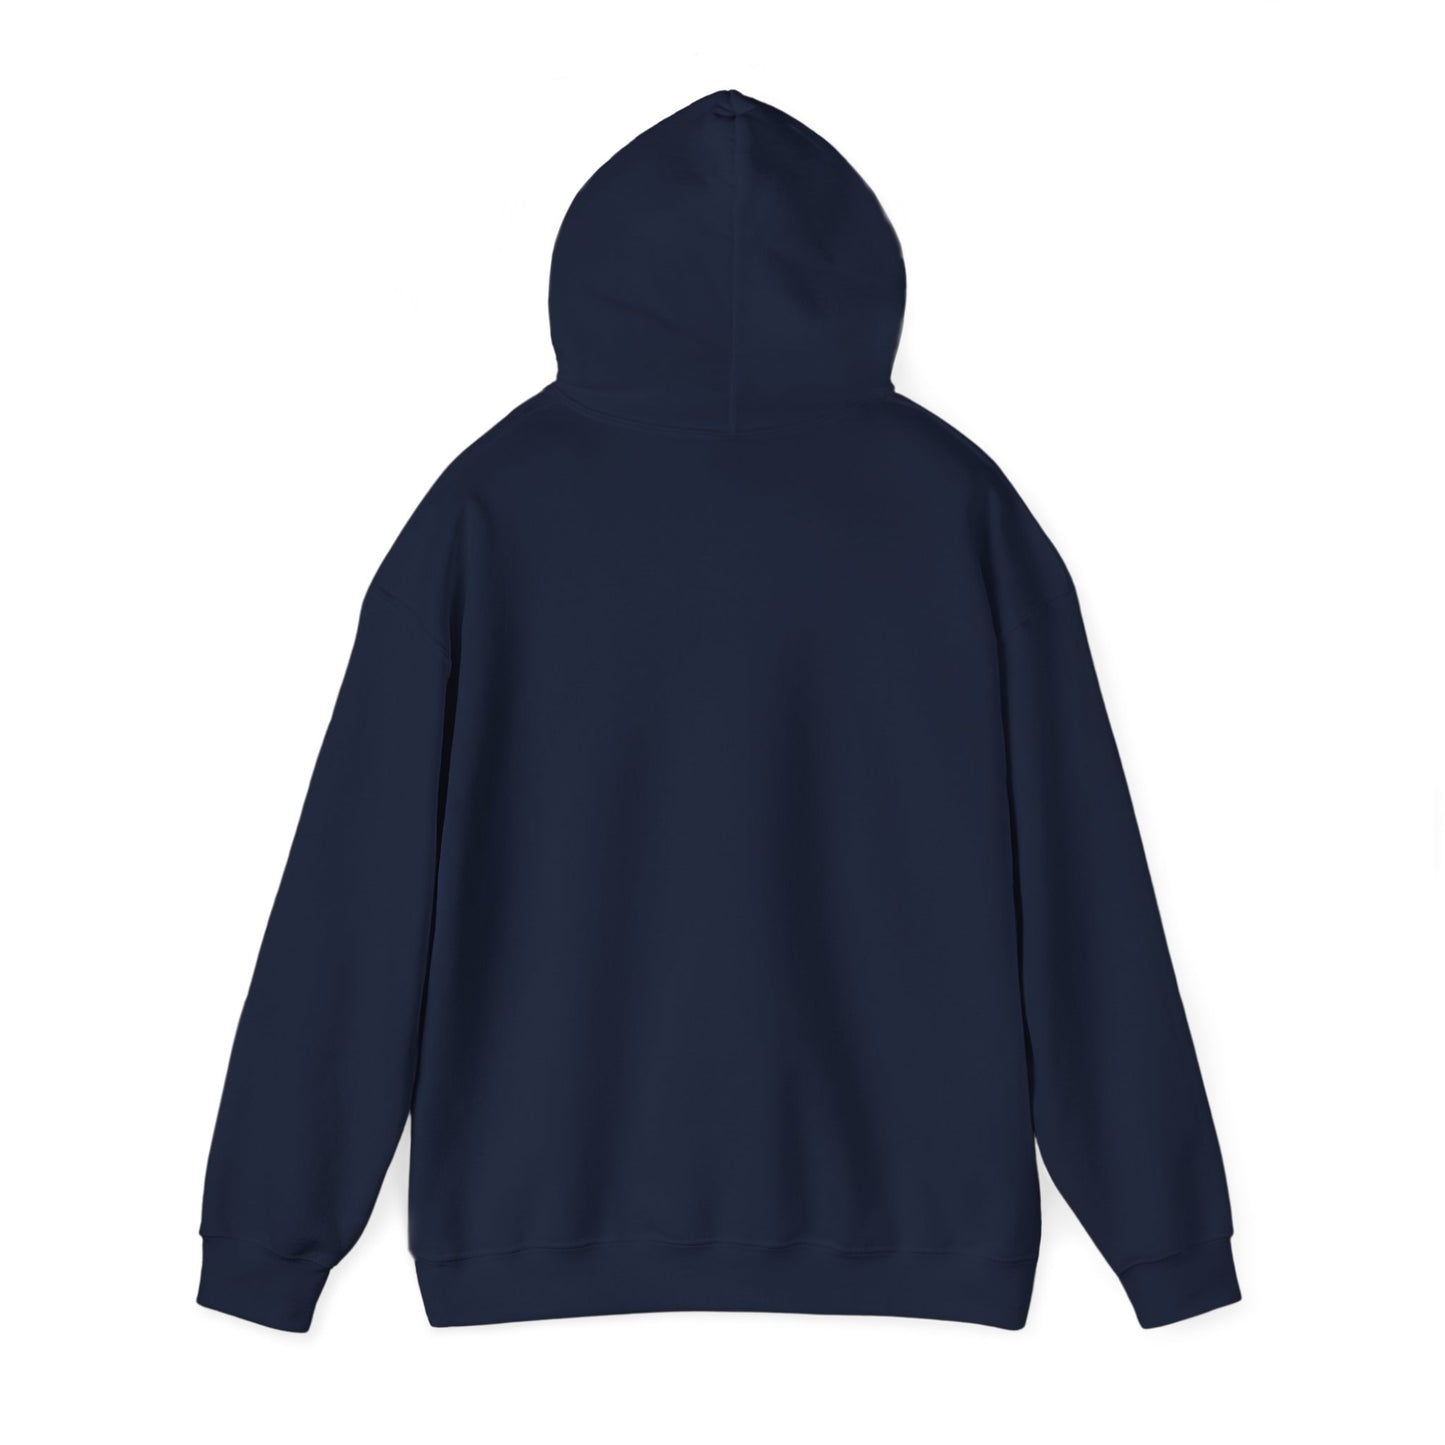 Bring it on Unisex Heavy Blend™ Hooded Sweatshirt